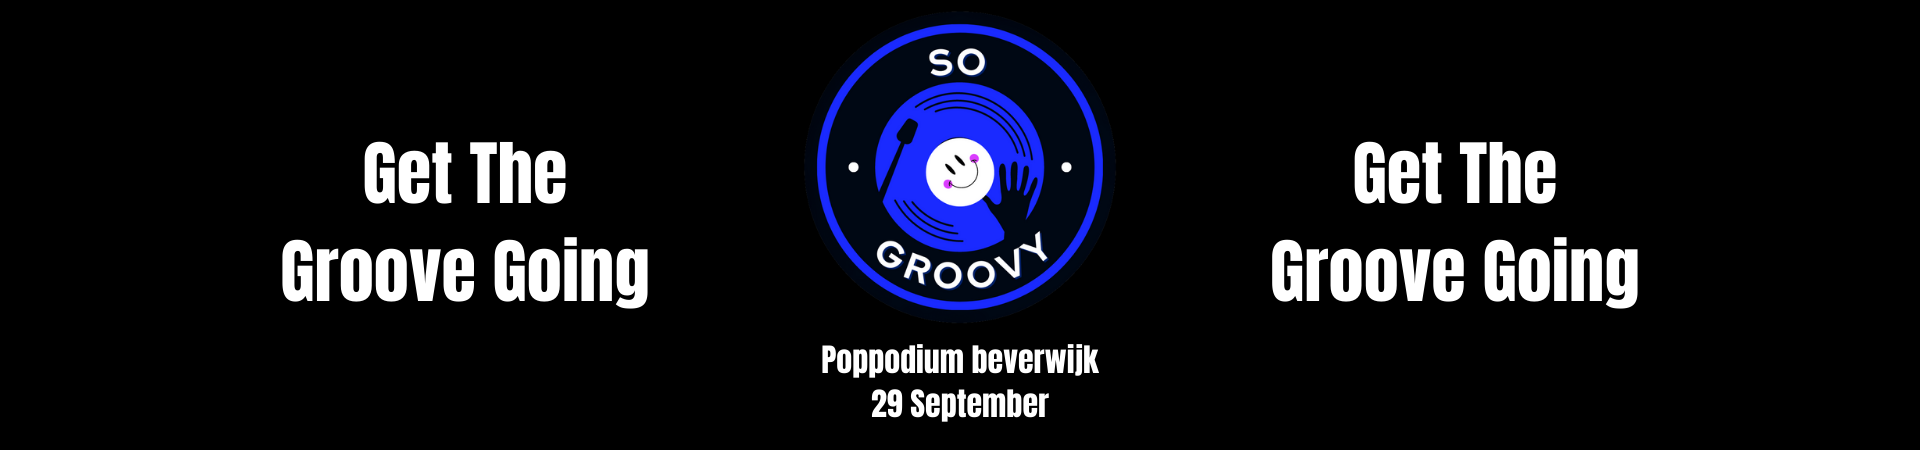 So Groovy - Poppodium Beverwijk